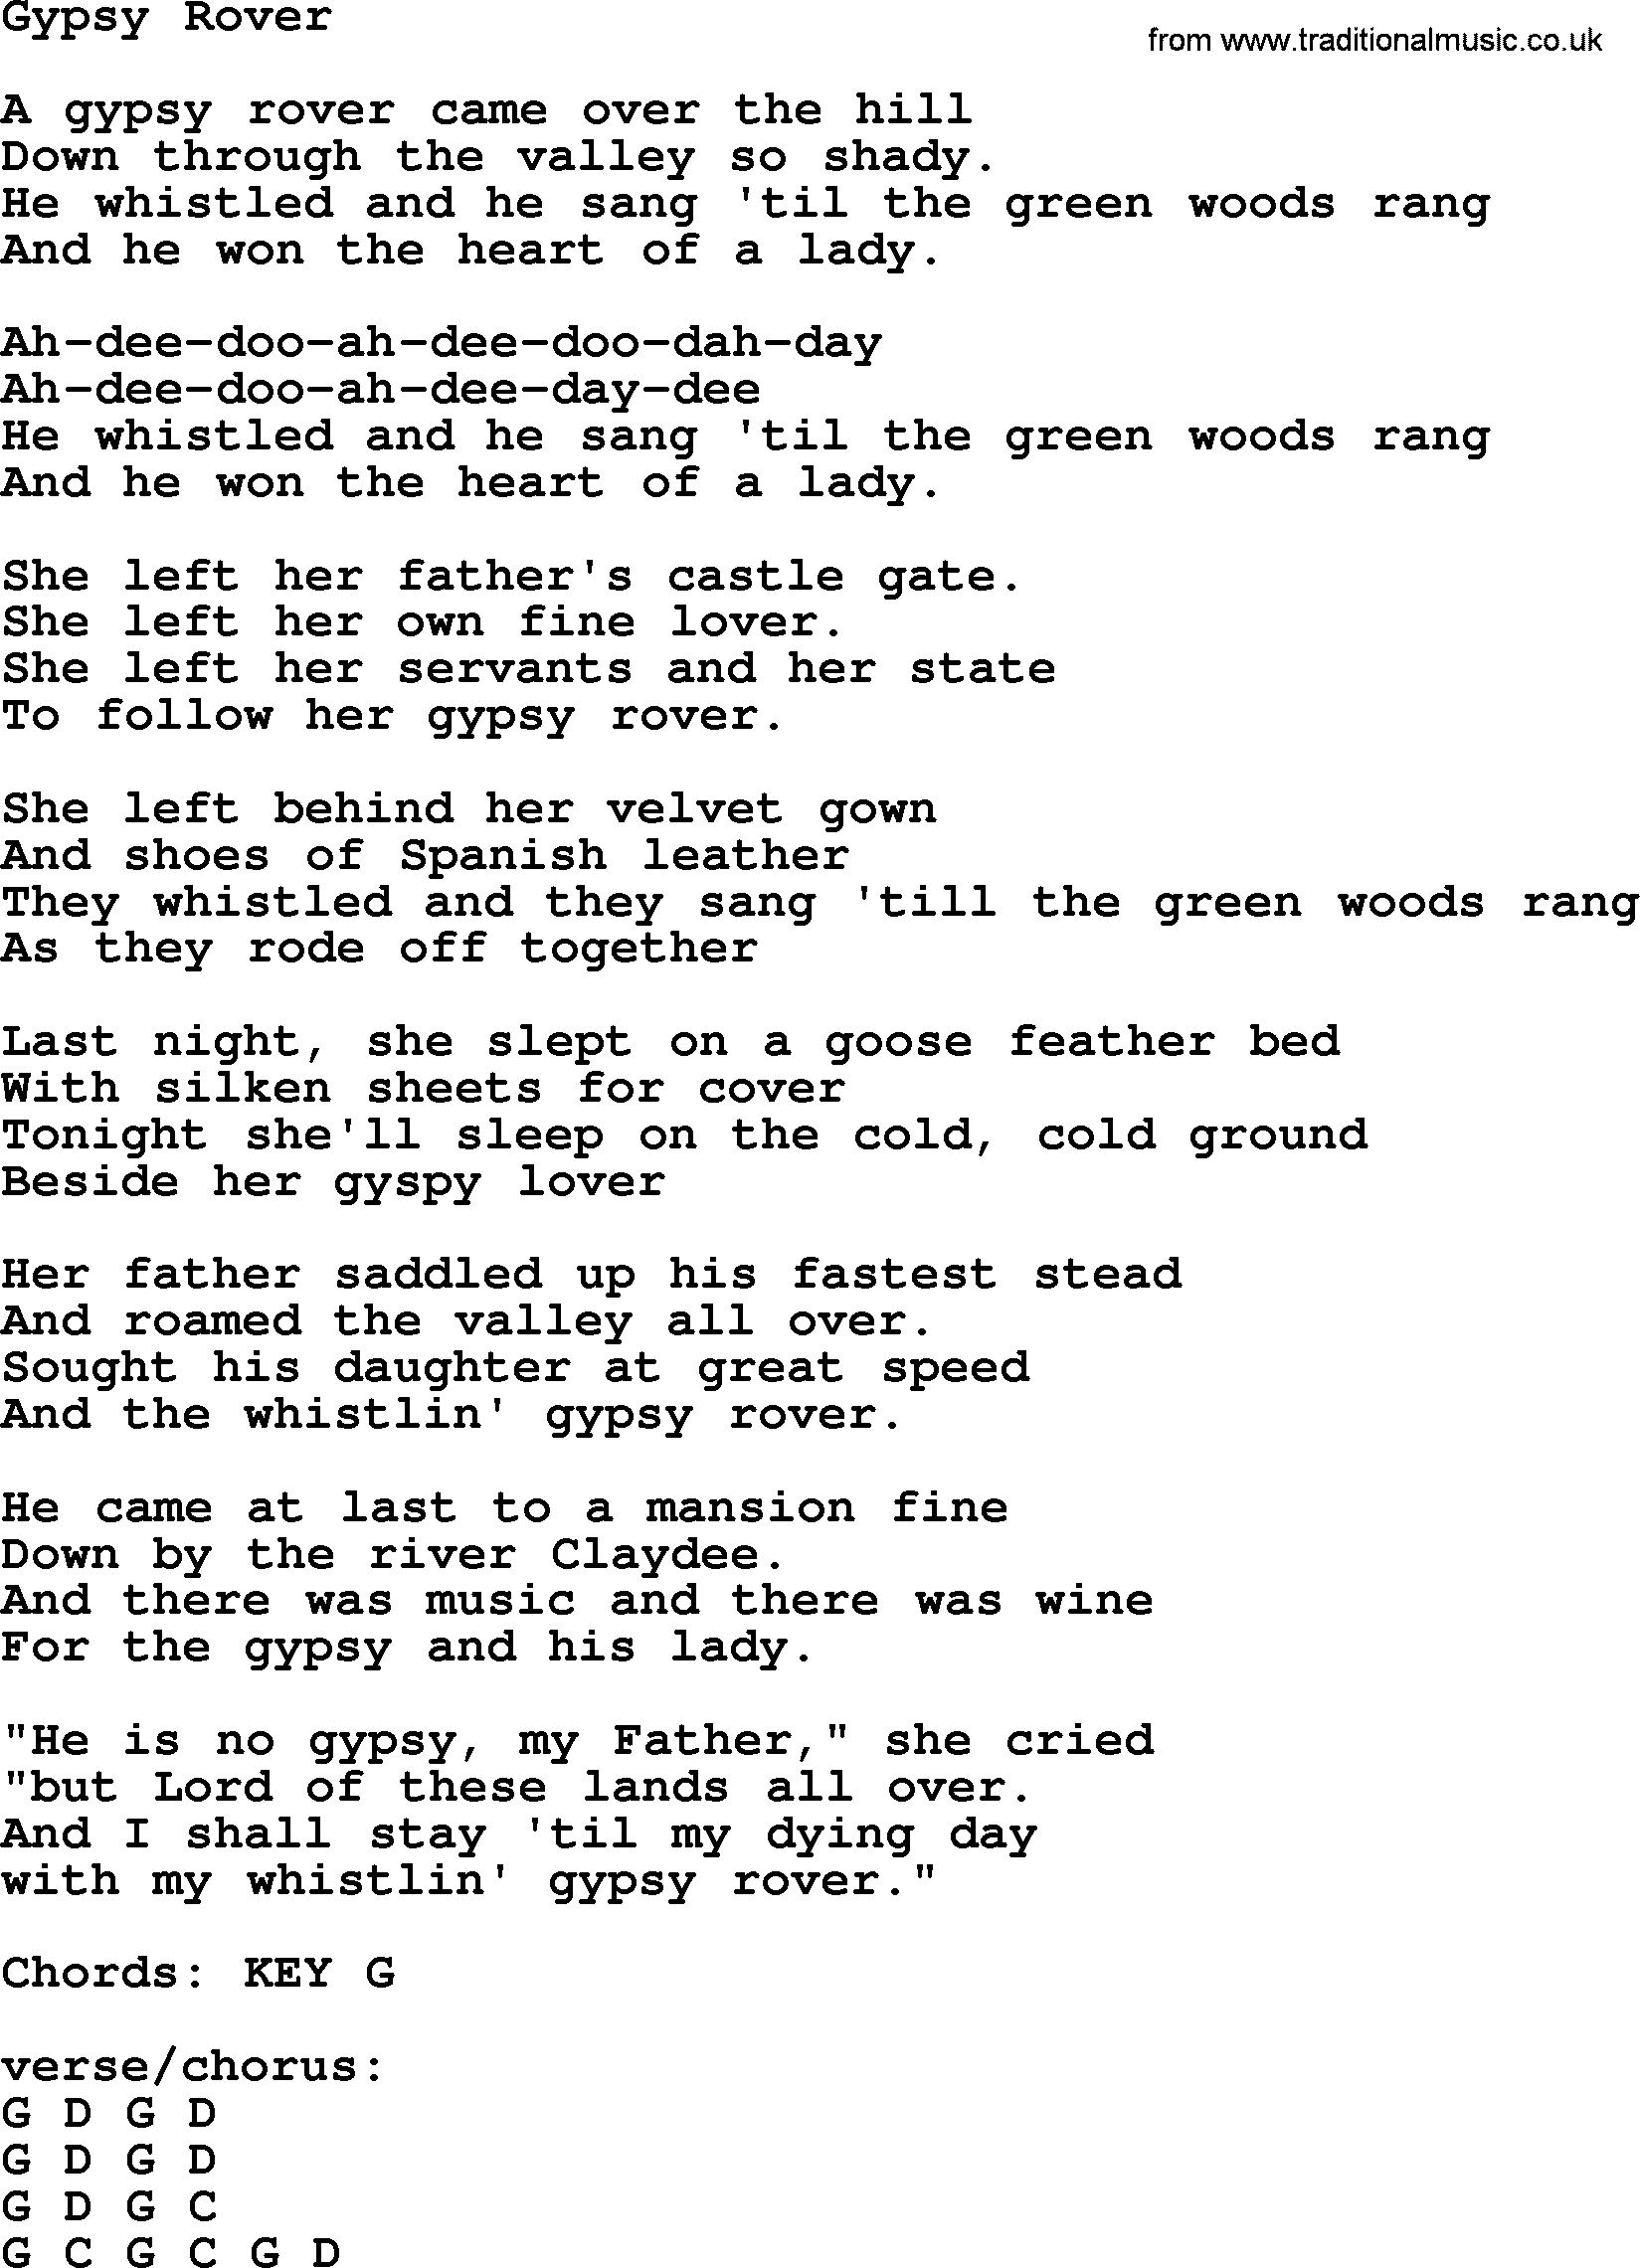 The Dubliners song: Gypsy Rover, lyrics